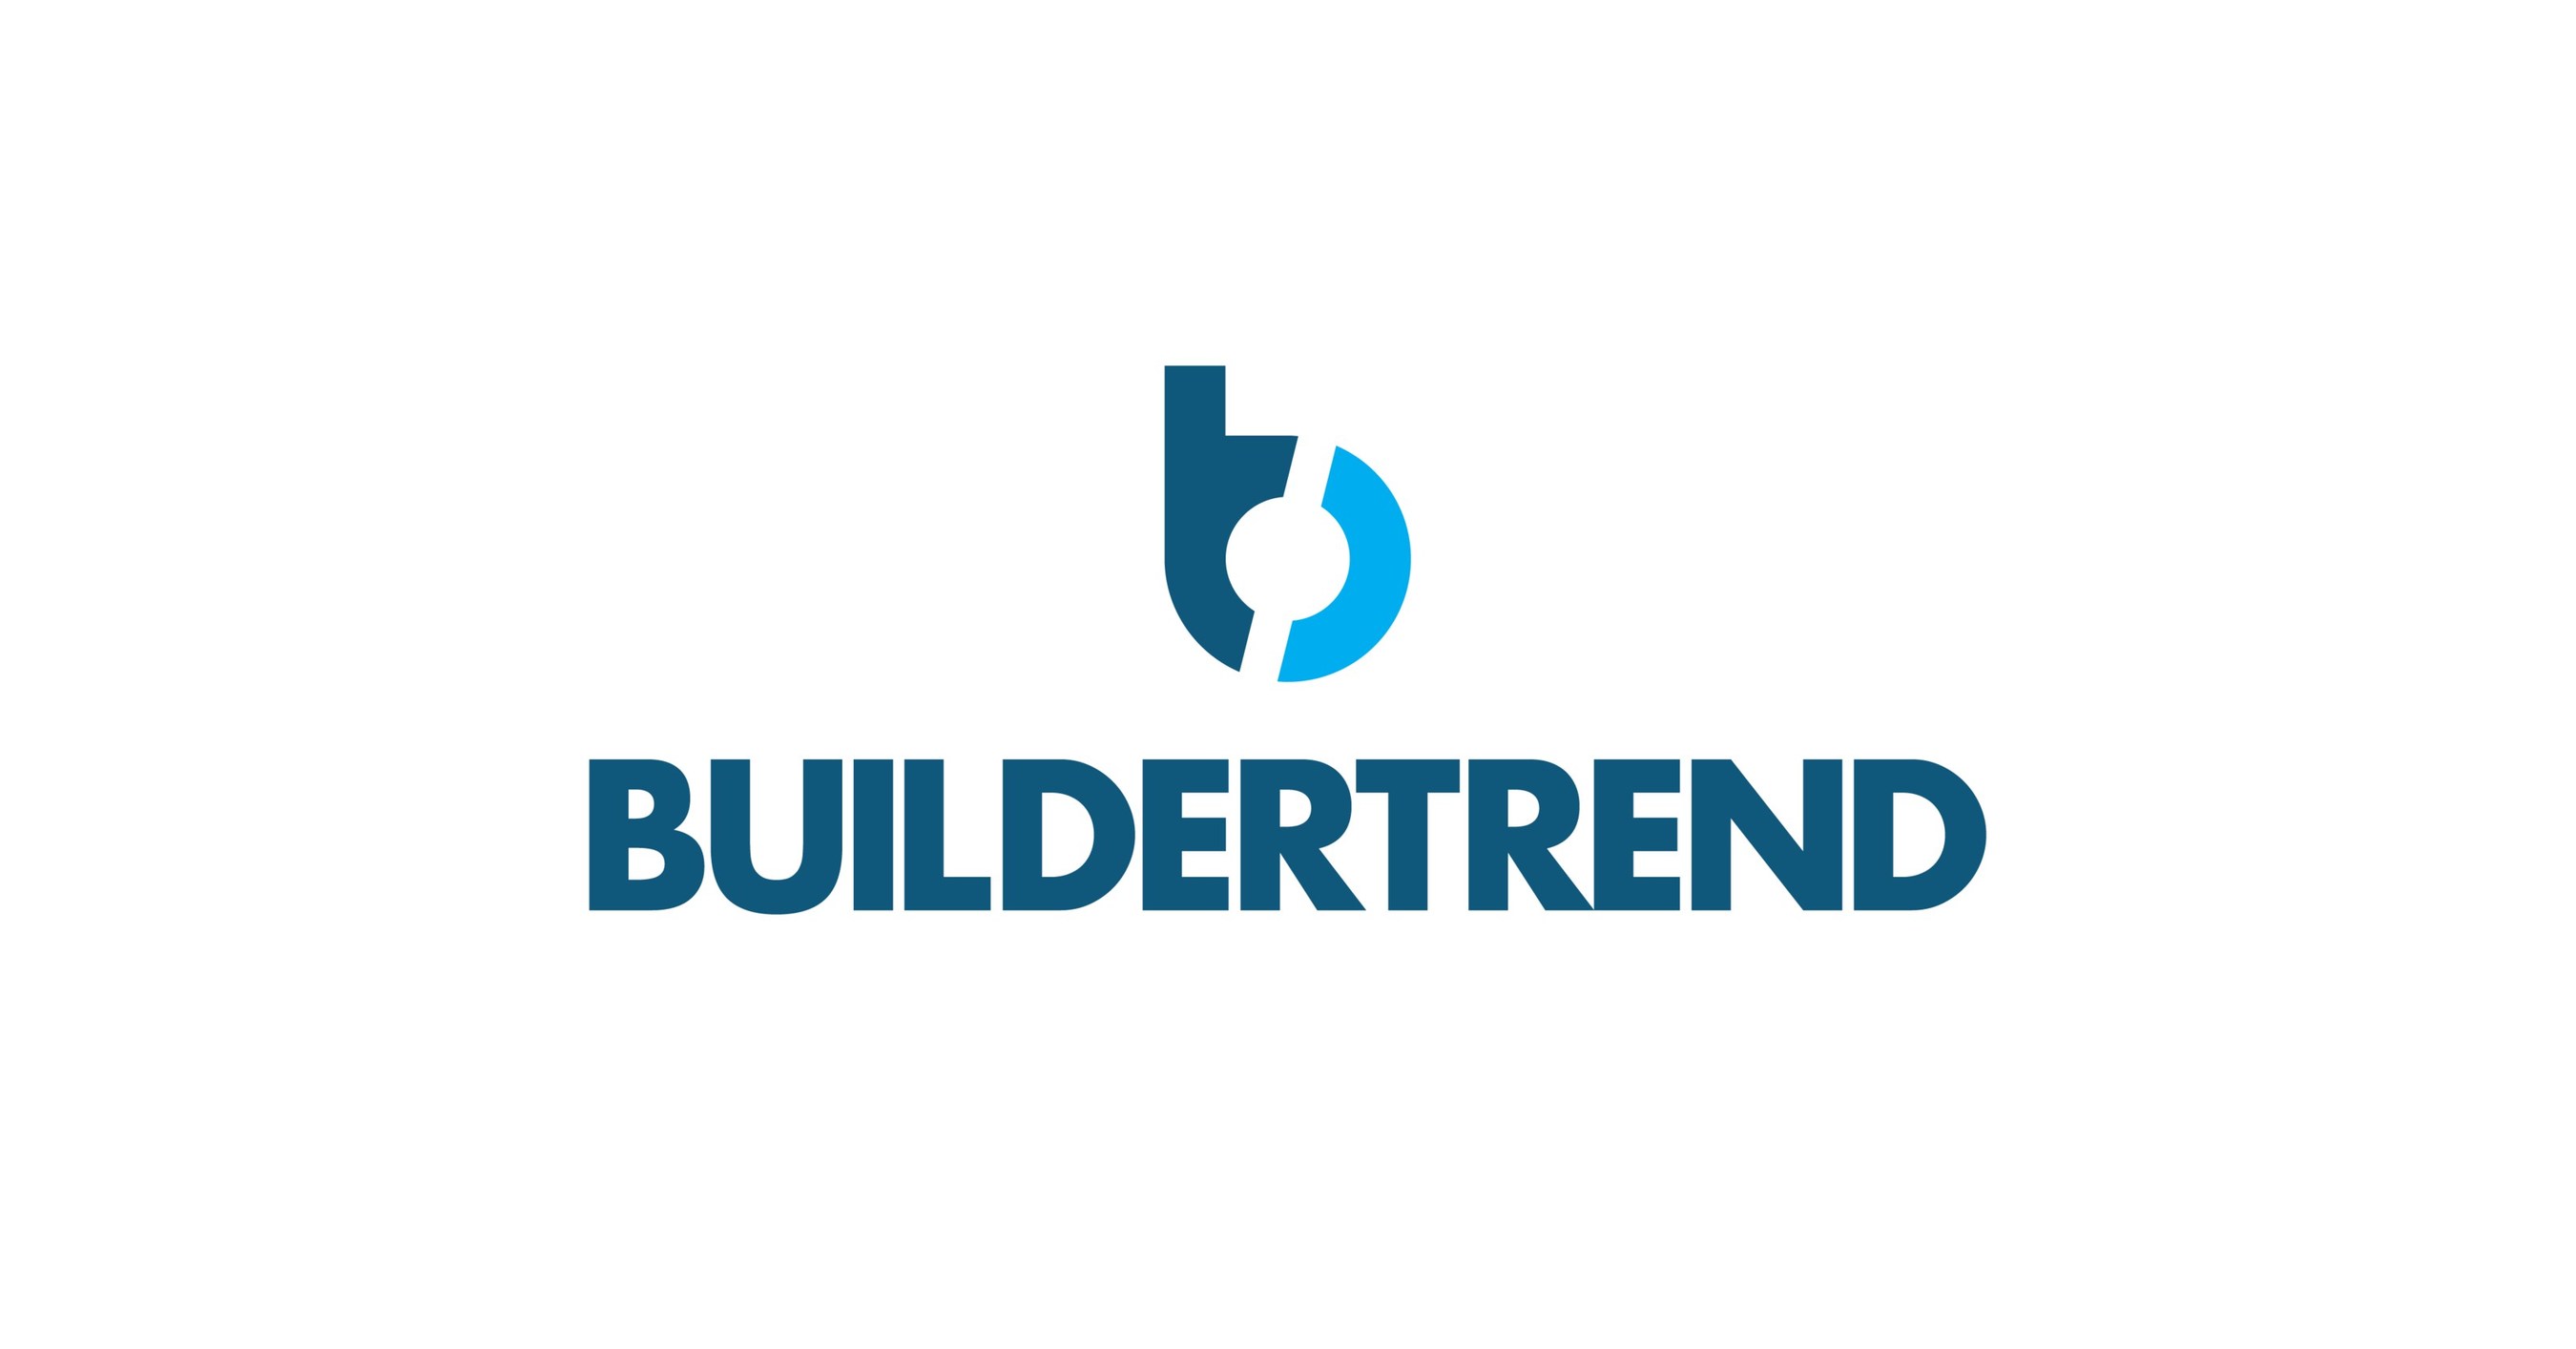 https://mma.prnewswire.com/media/1391625/BuilderTrend_Logo.jpg?p=facebook